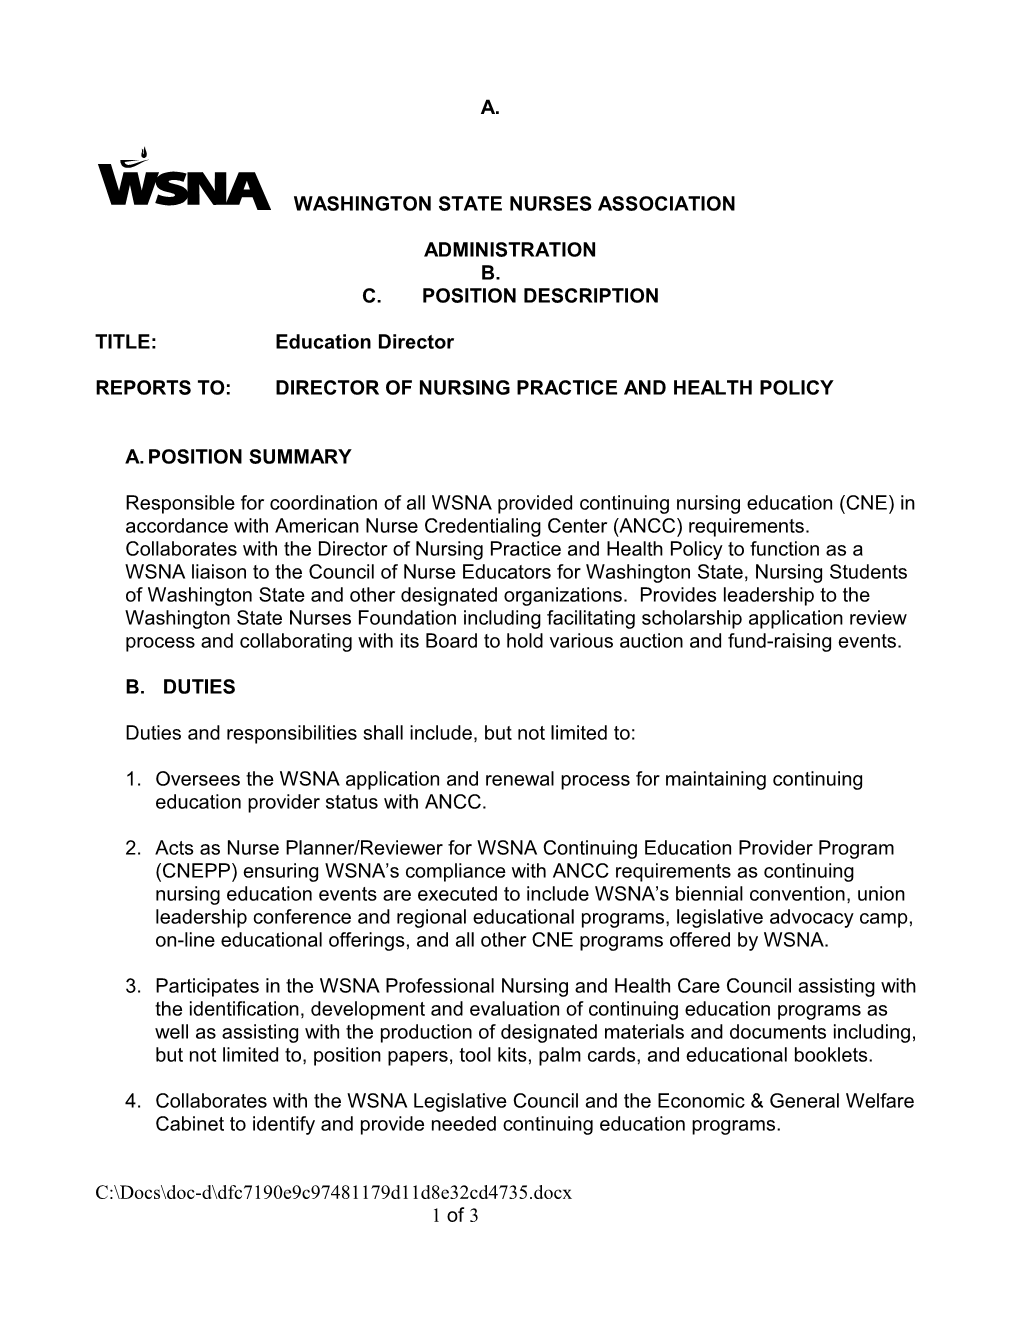 Washington State Nurses Association (Wsna)